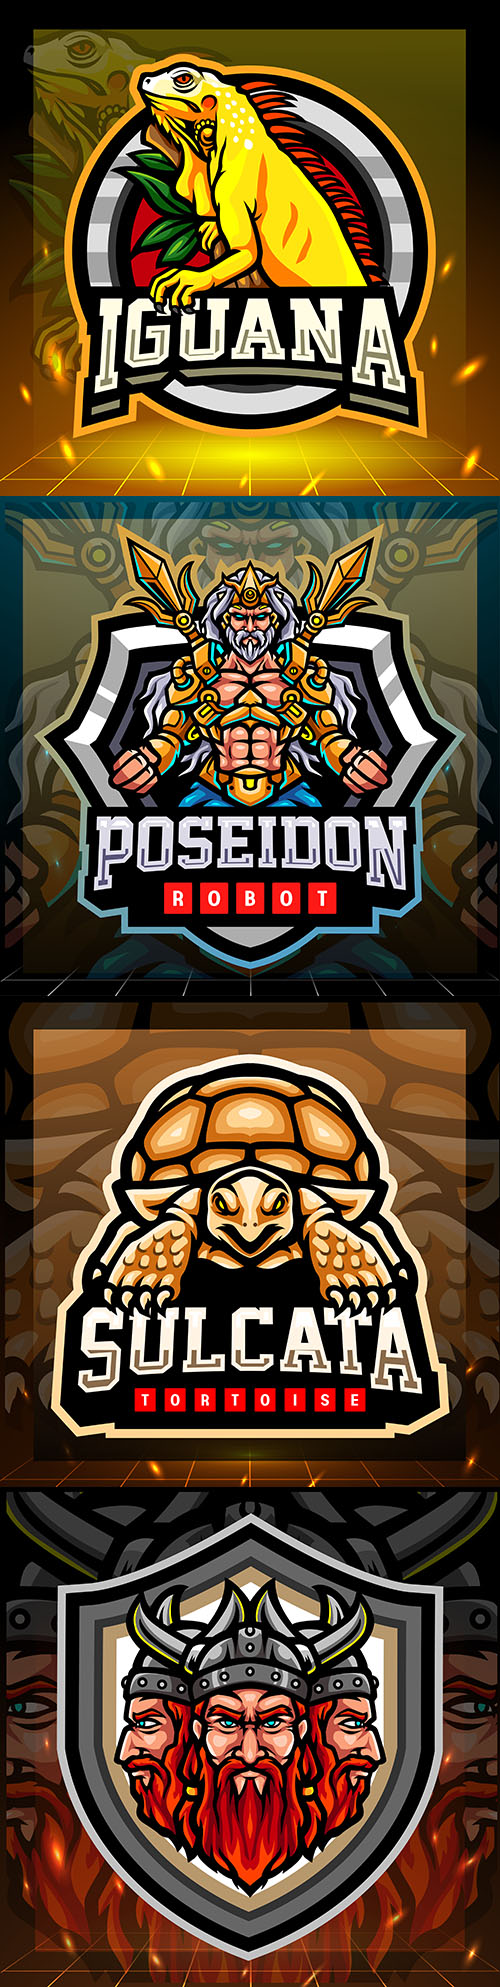 Mascot emblem gaming design cybersport illustration 8
